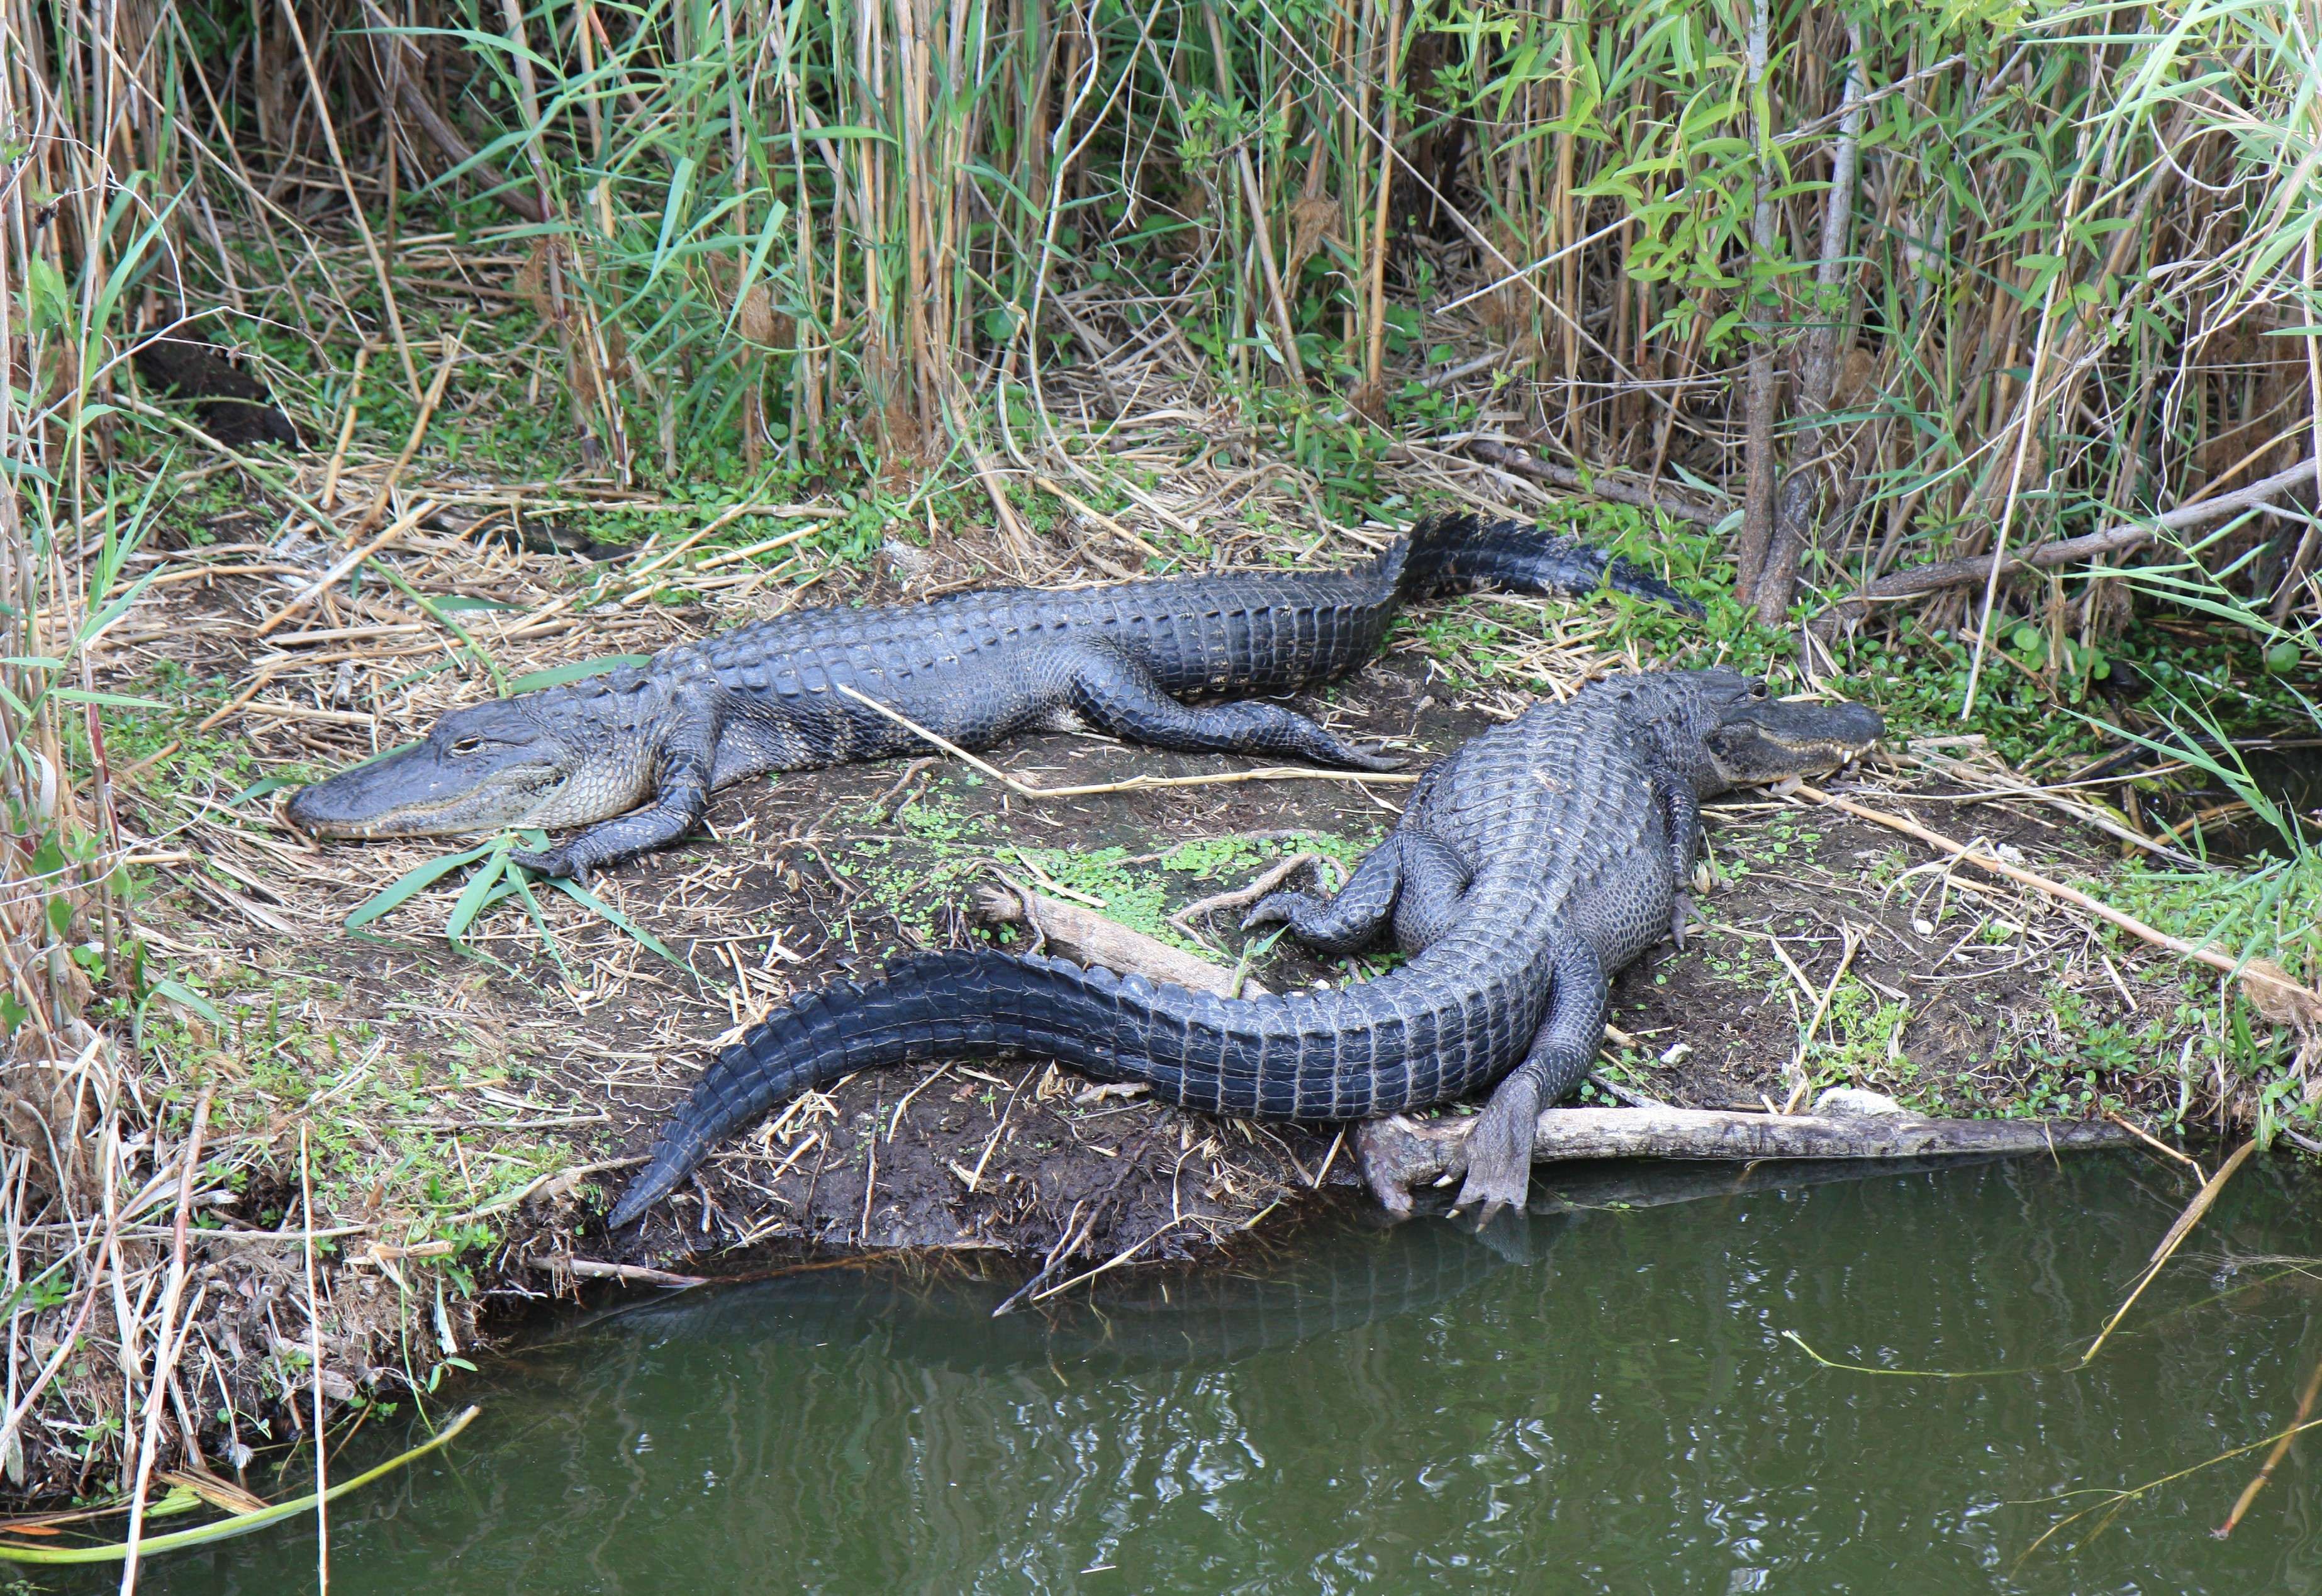 A couple of alligators